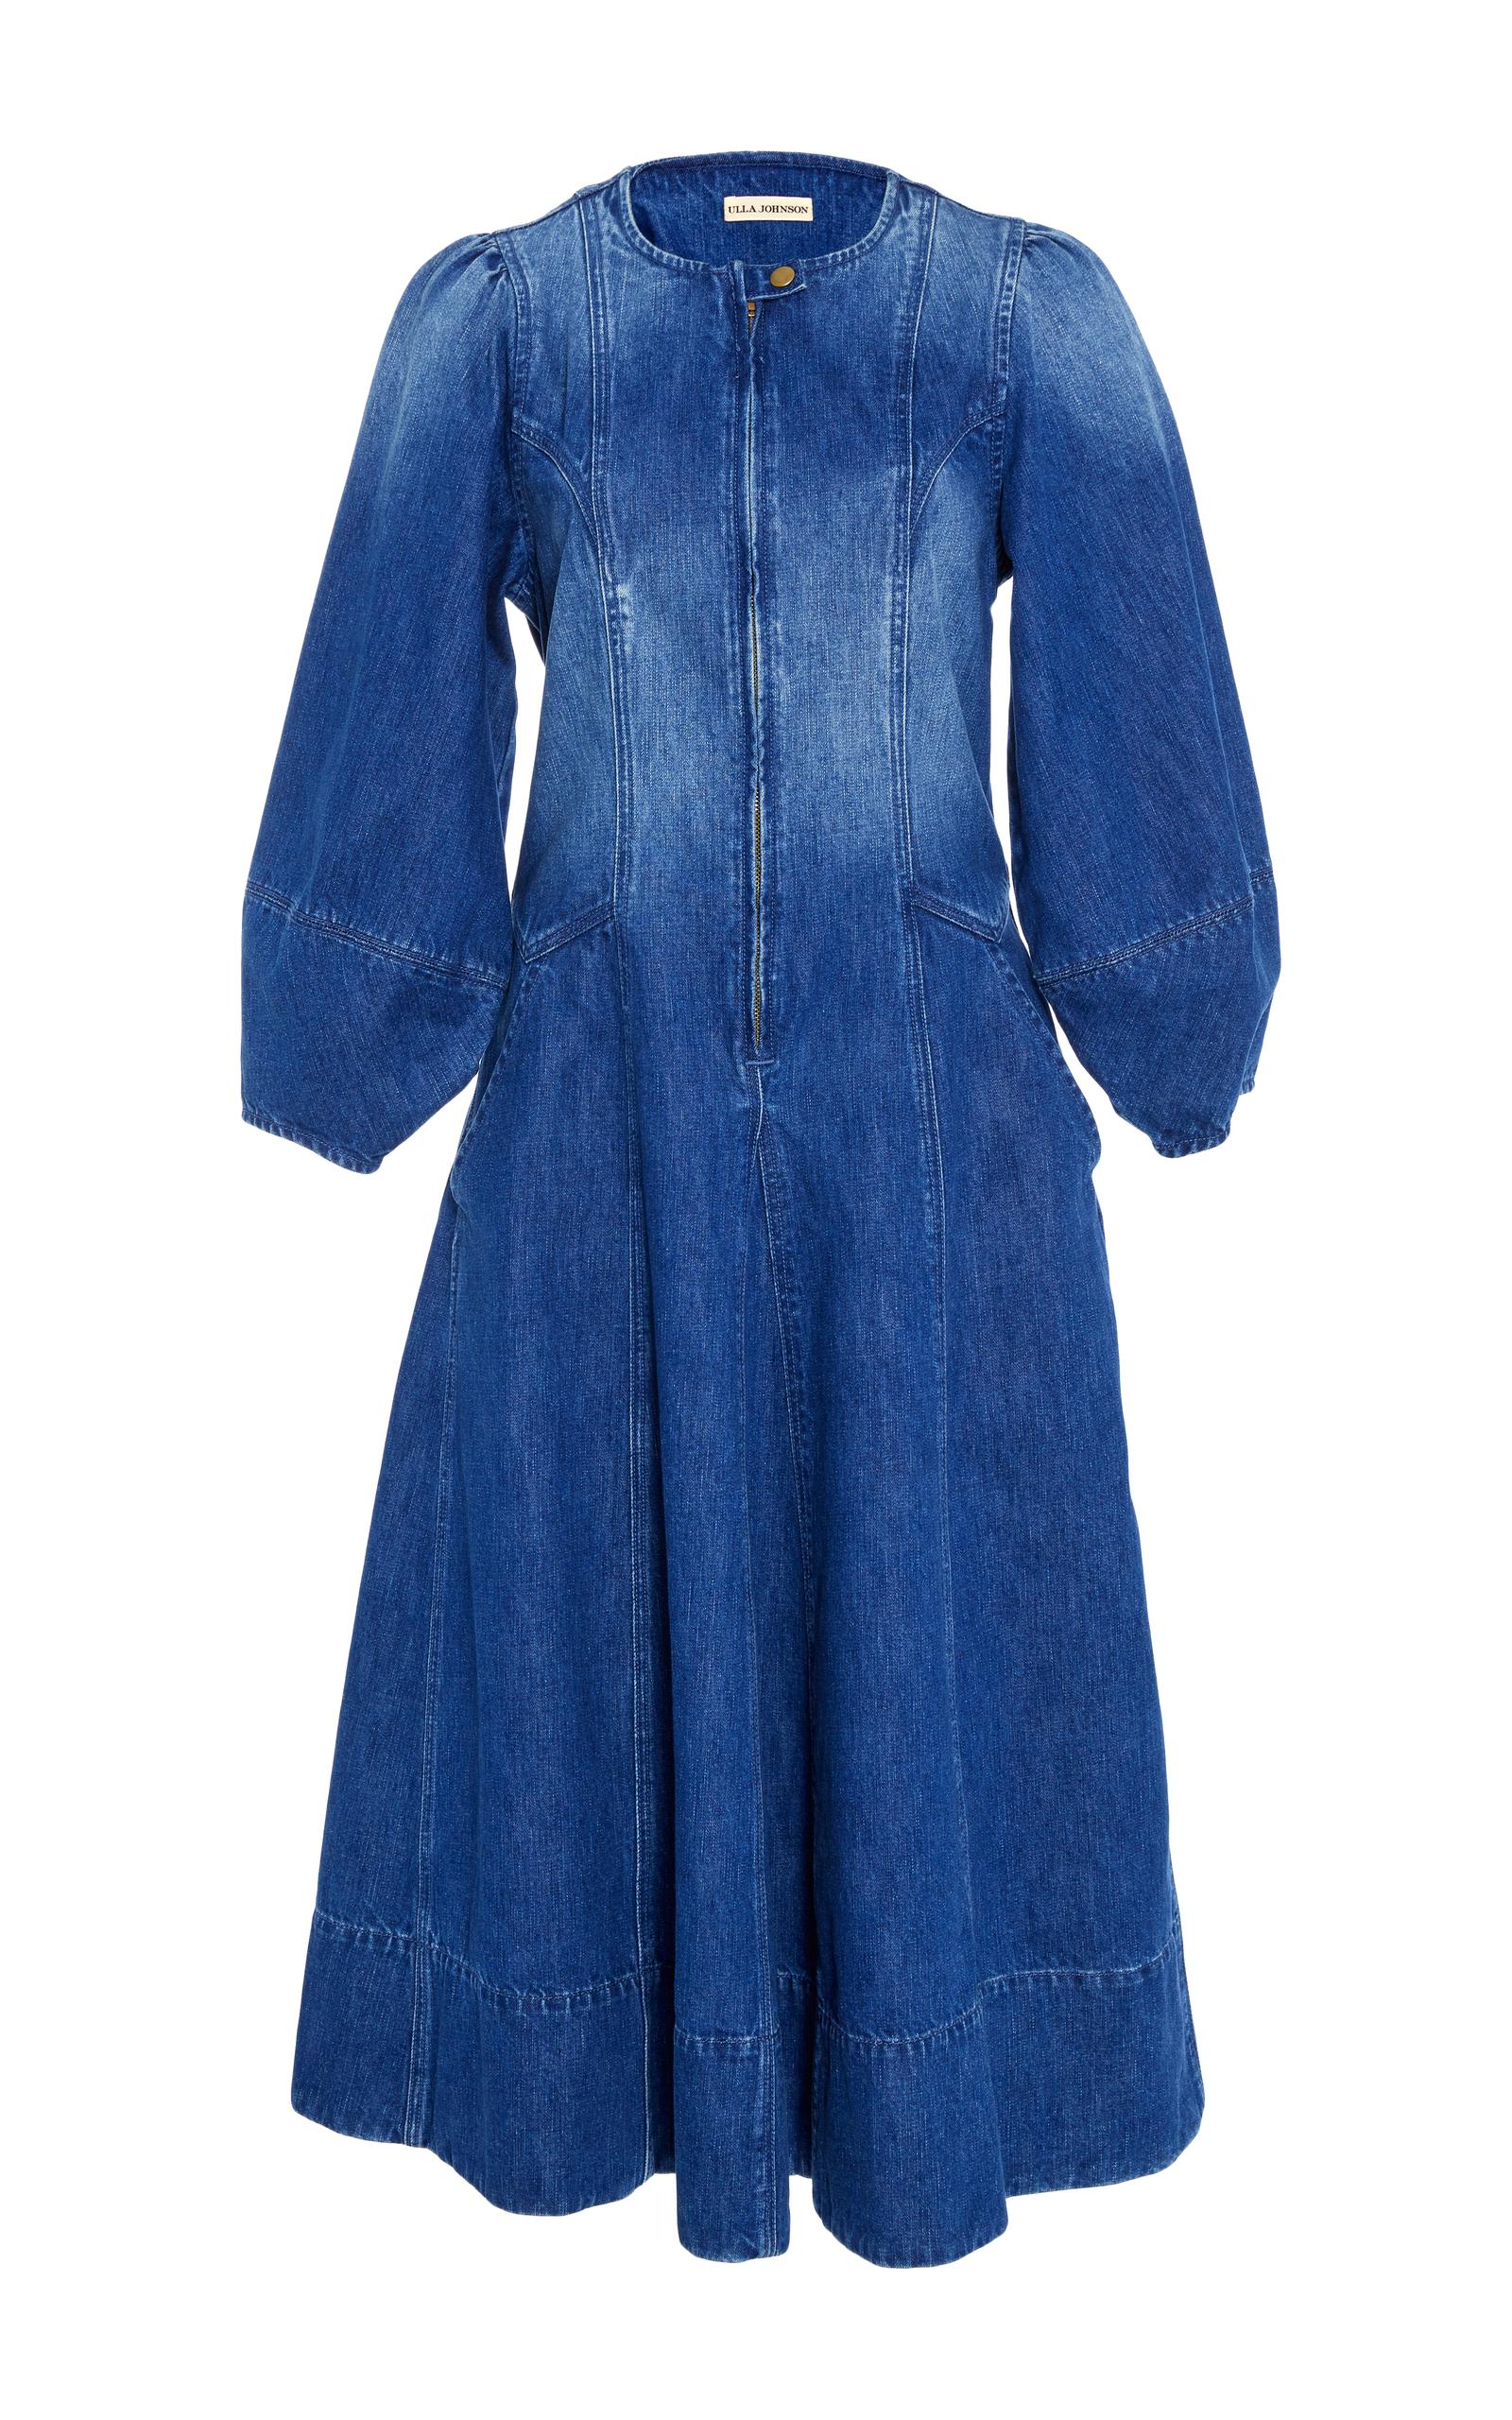 Ulla Johnson Dumas Denim Dress in Blue - Lyst